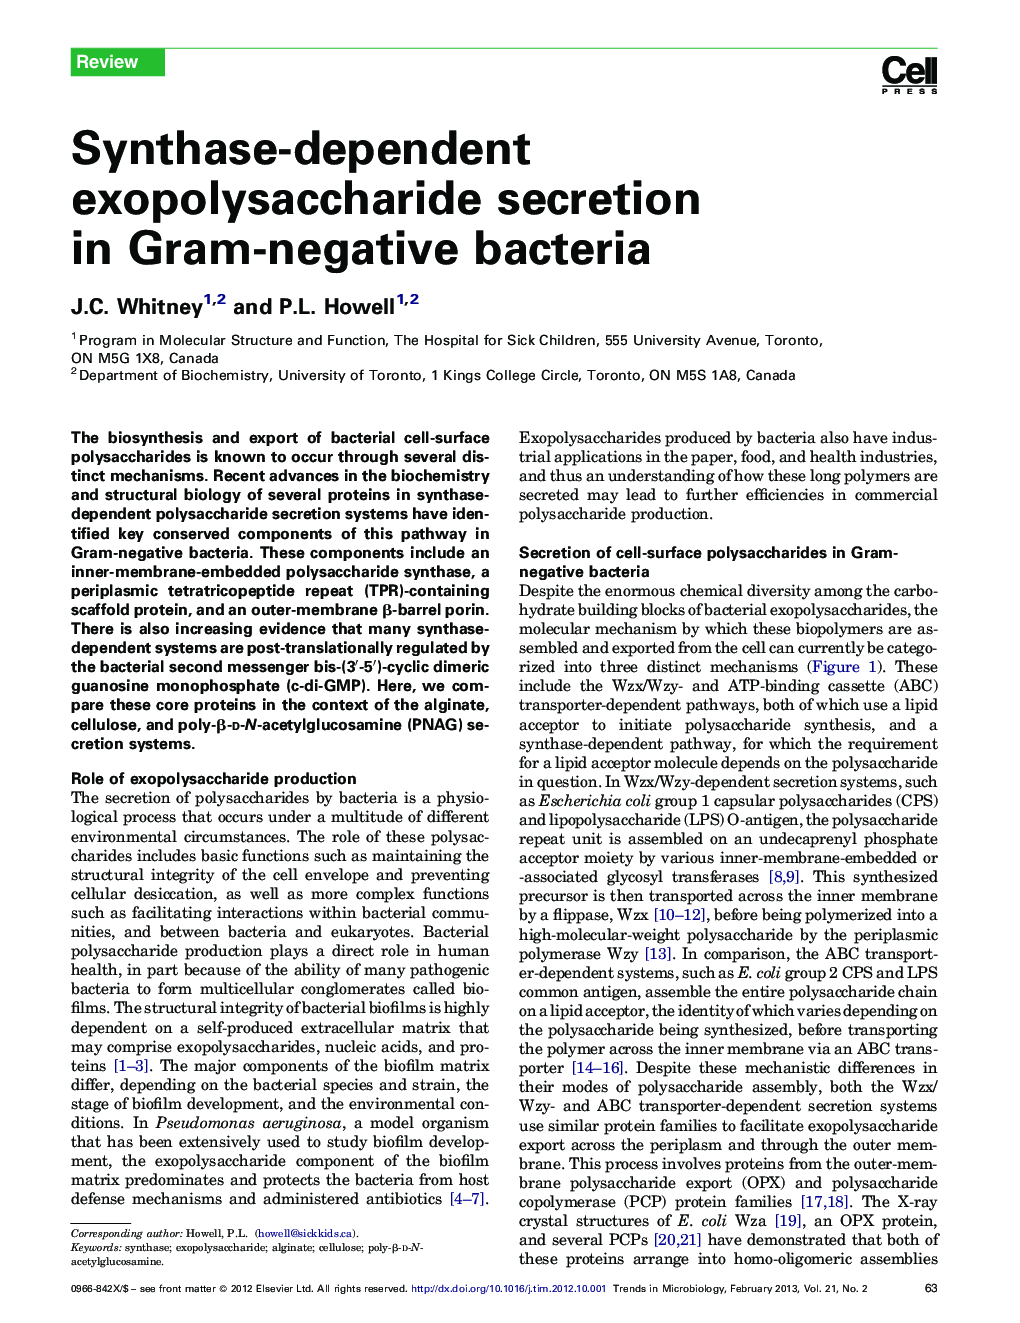 Synthase-dependent exopolysaccharide secretion in Gram-negative bacteria